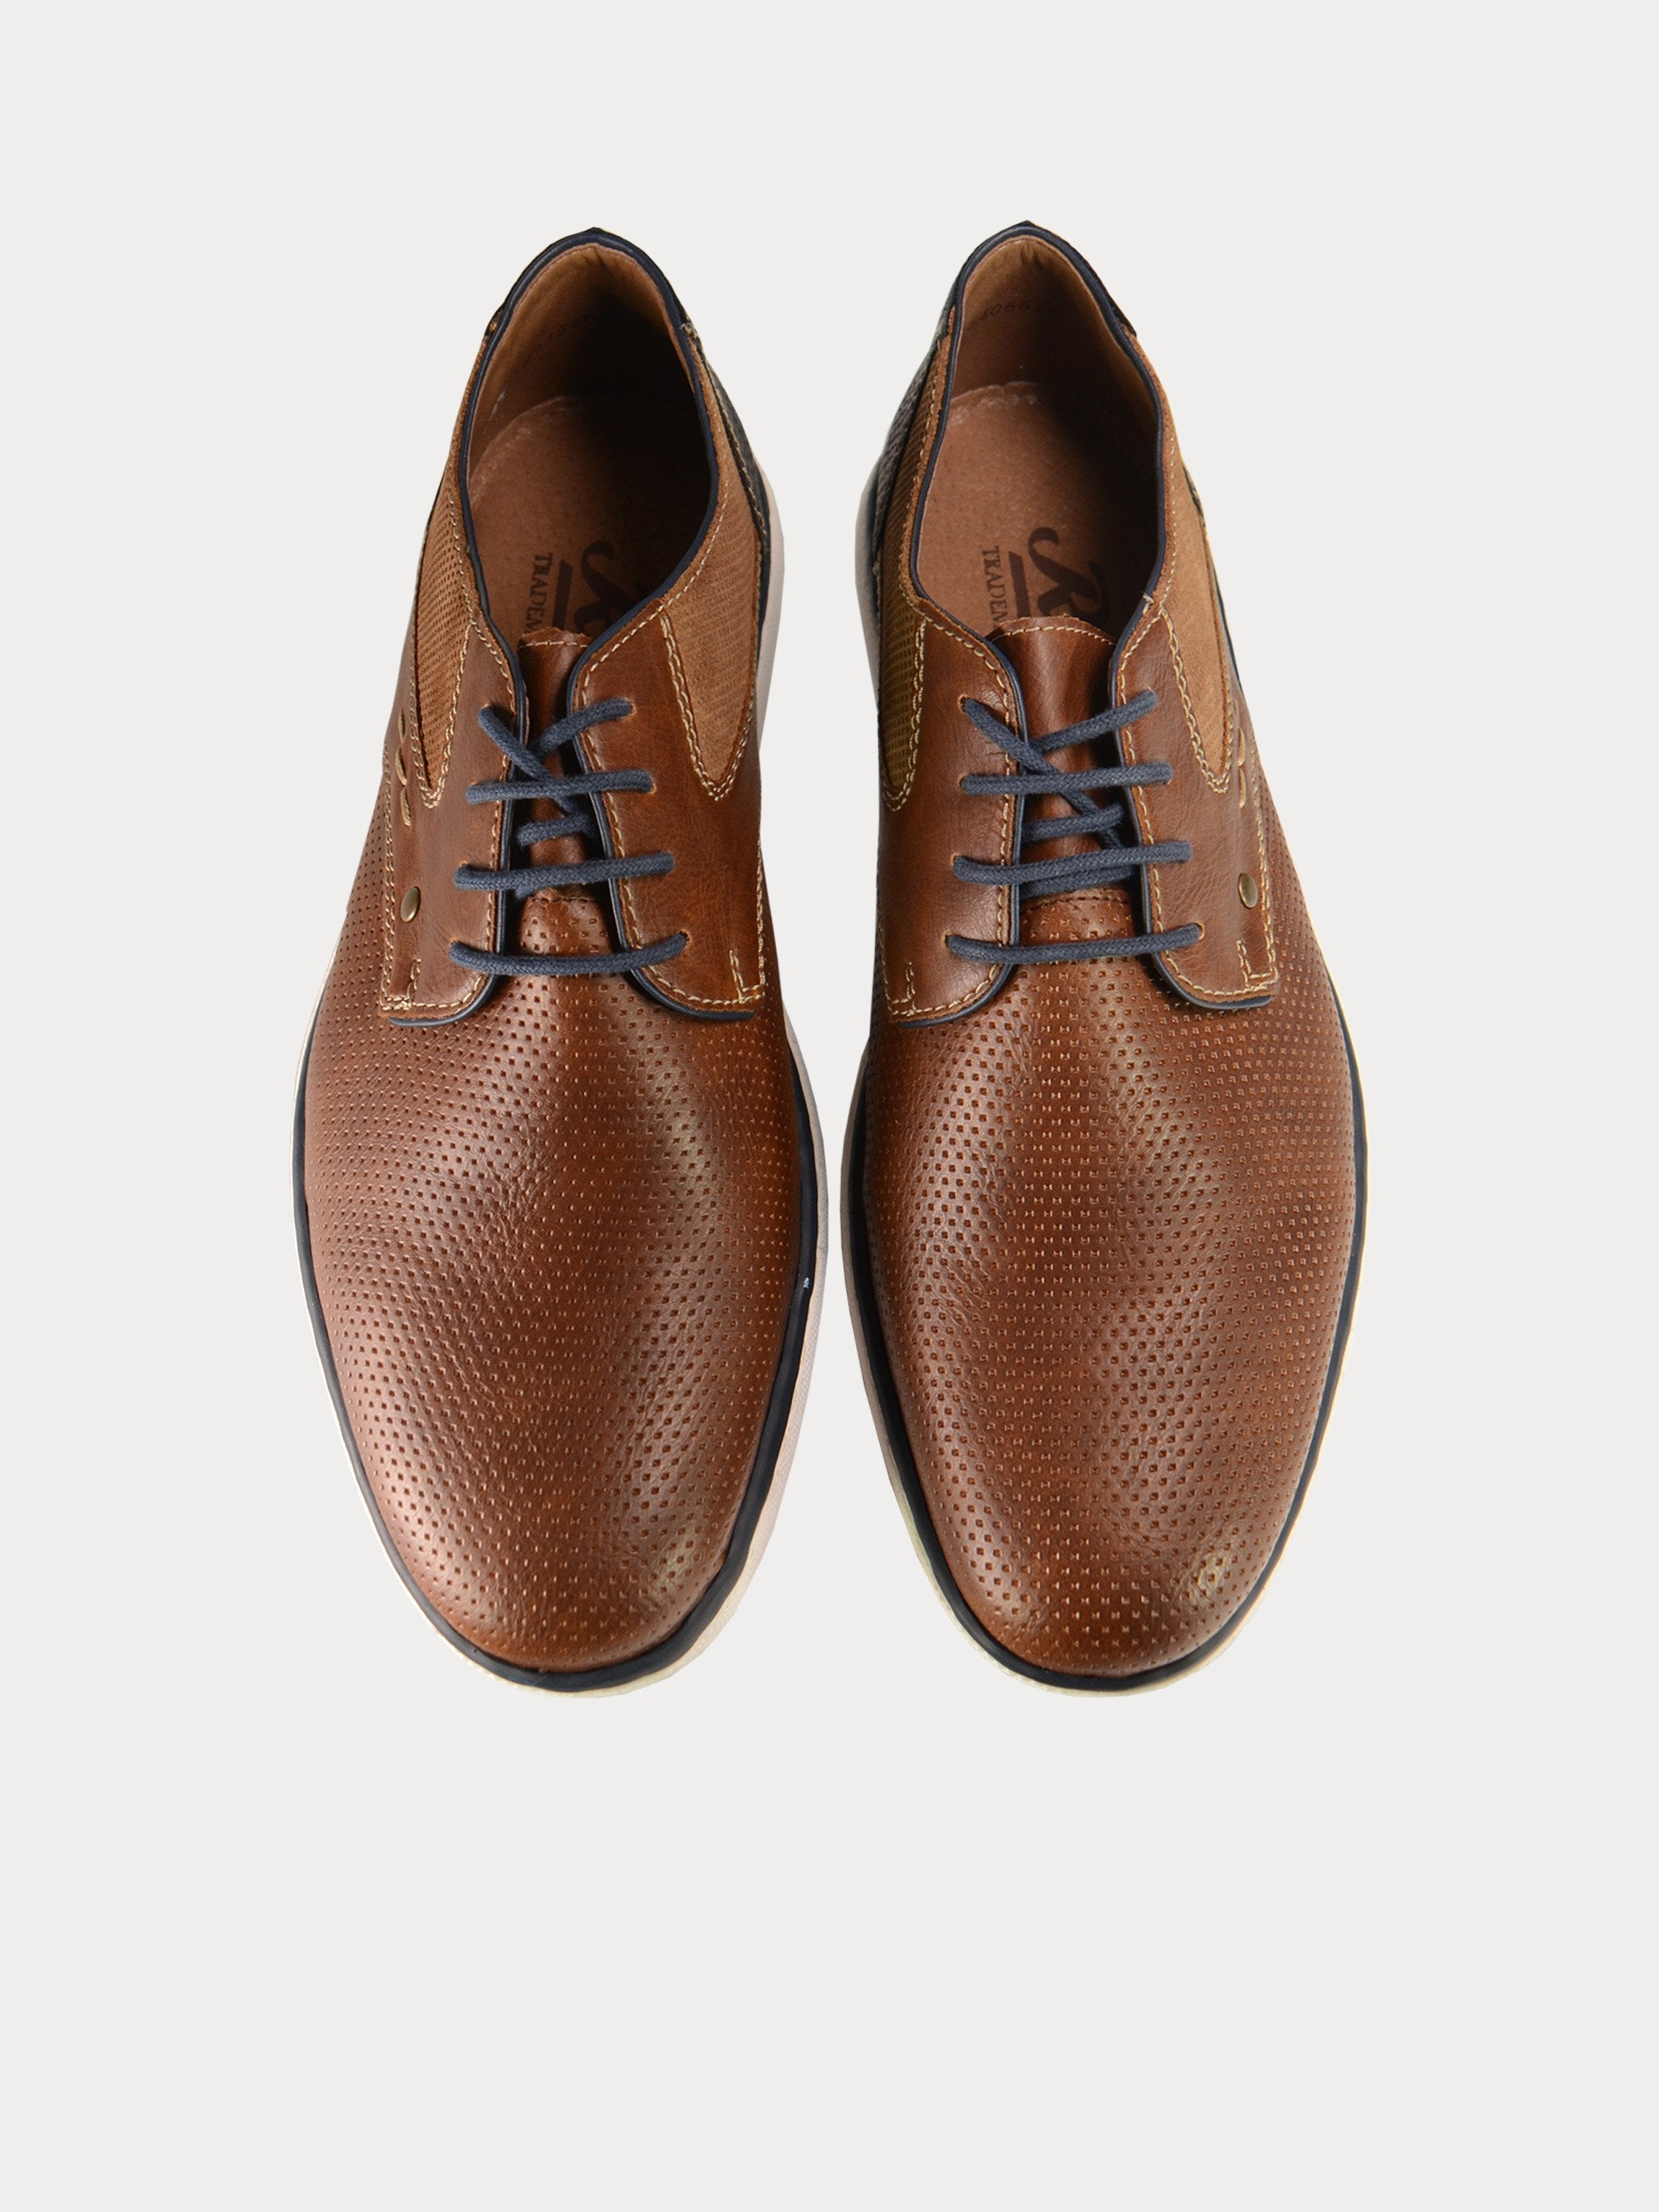 Rieker Men's Casual Lace Up Leather Shoes #color_Brown